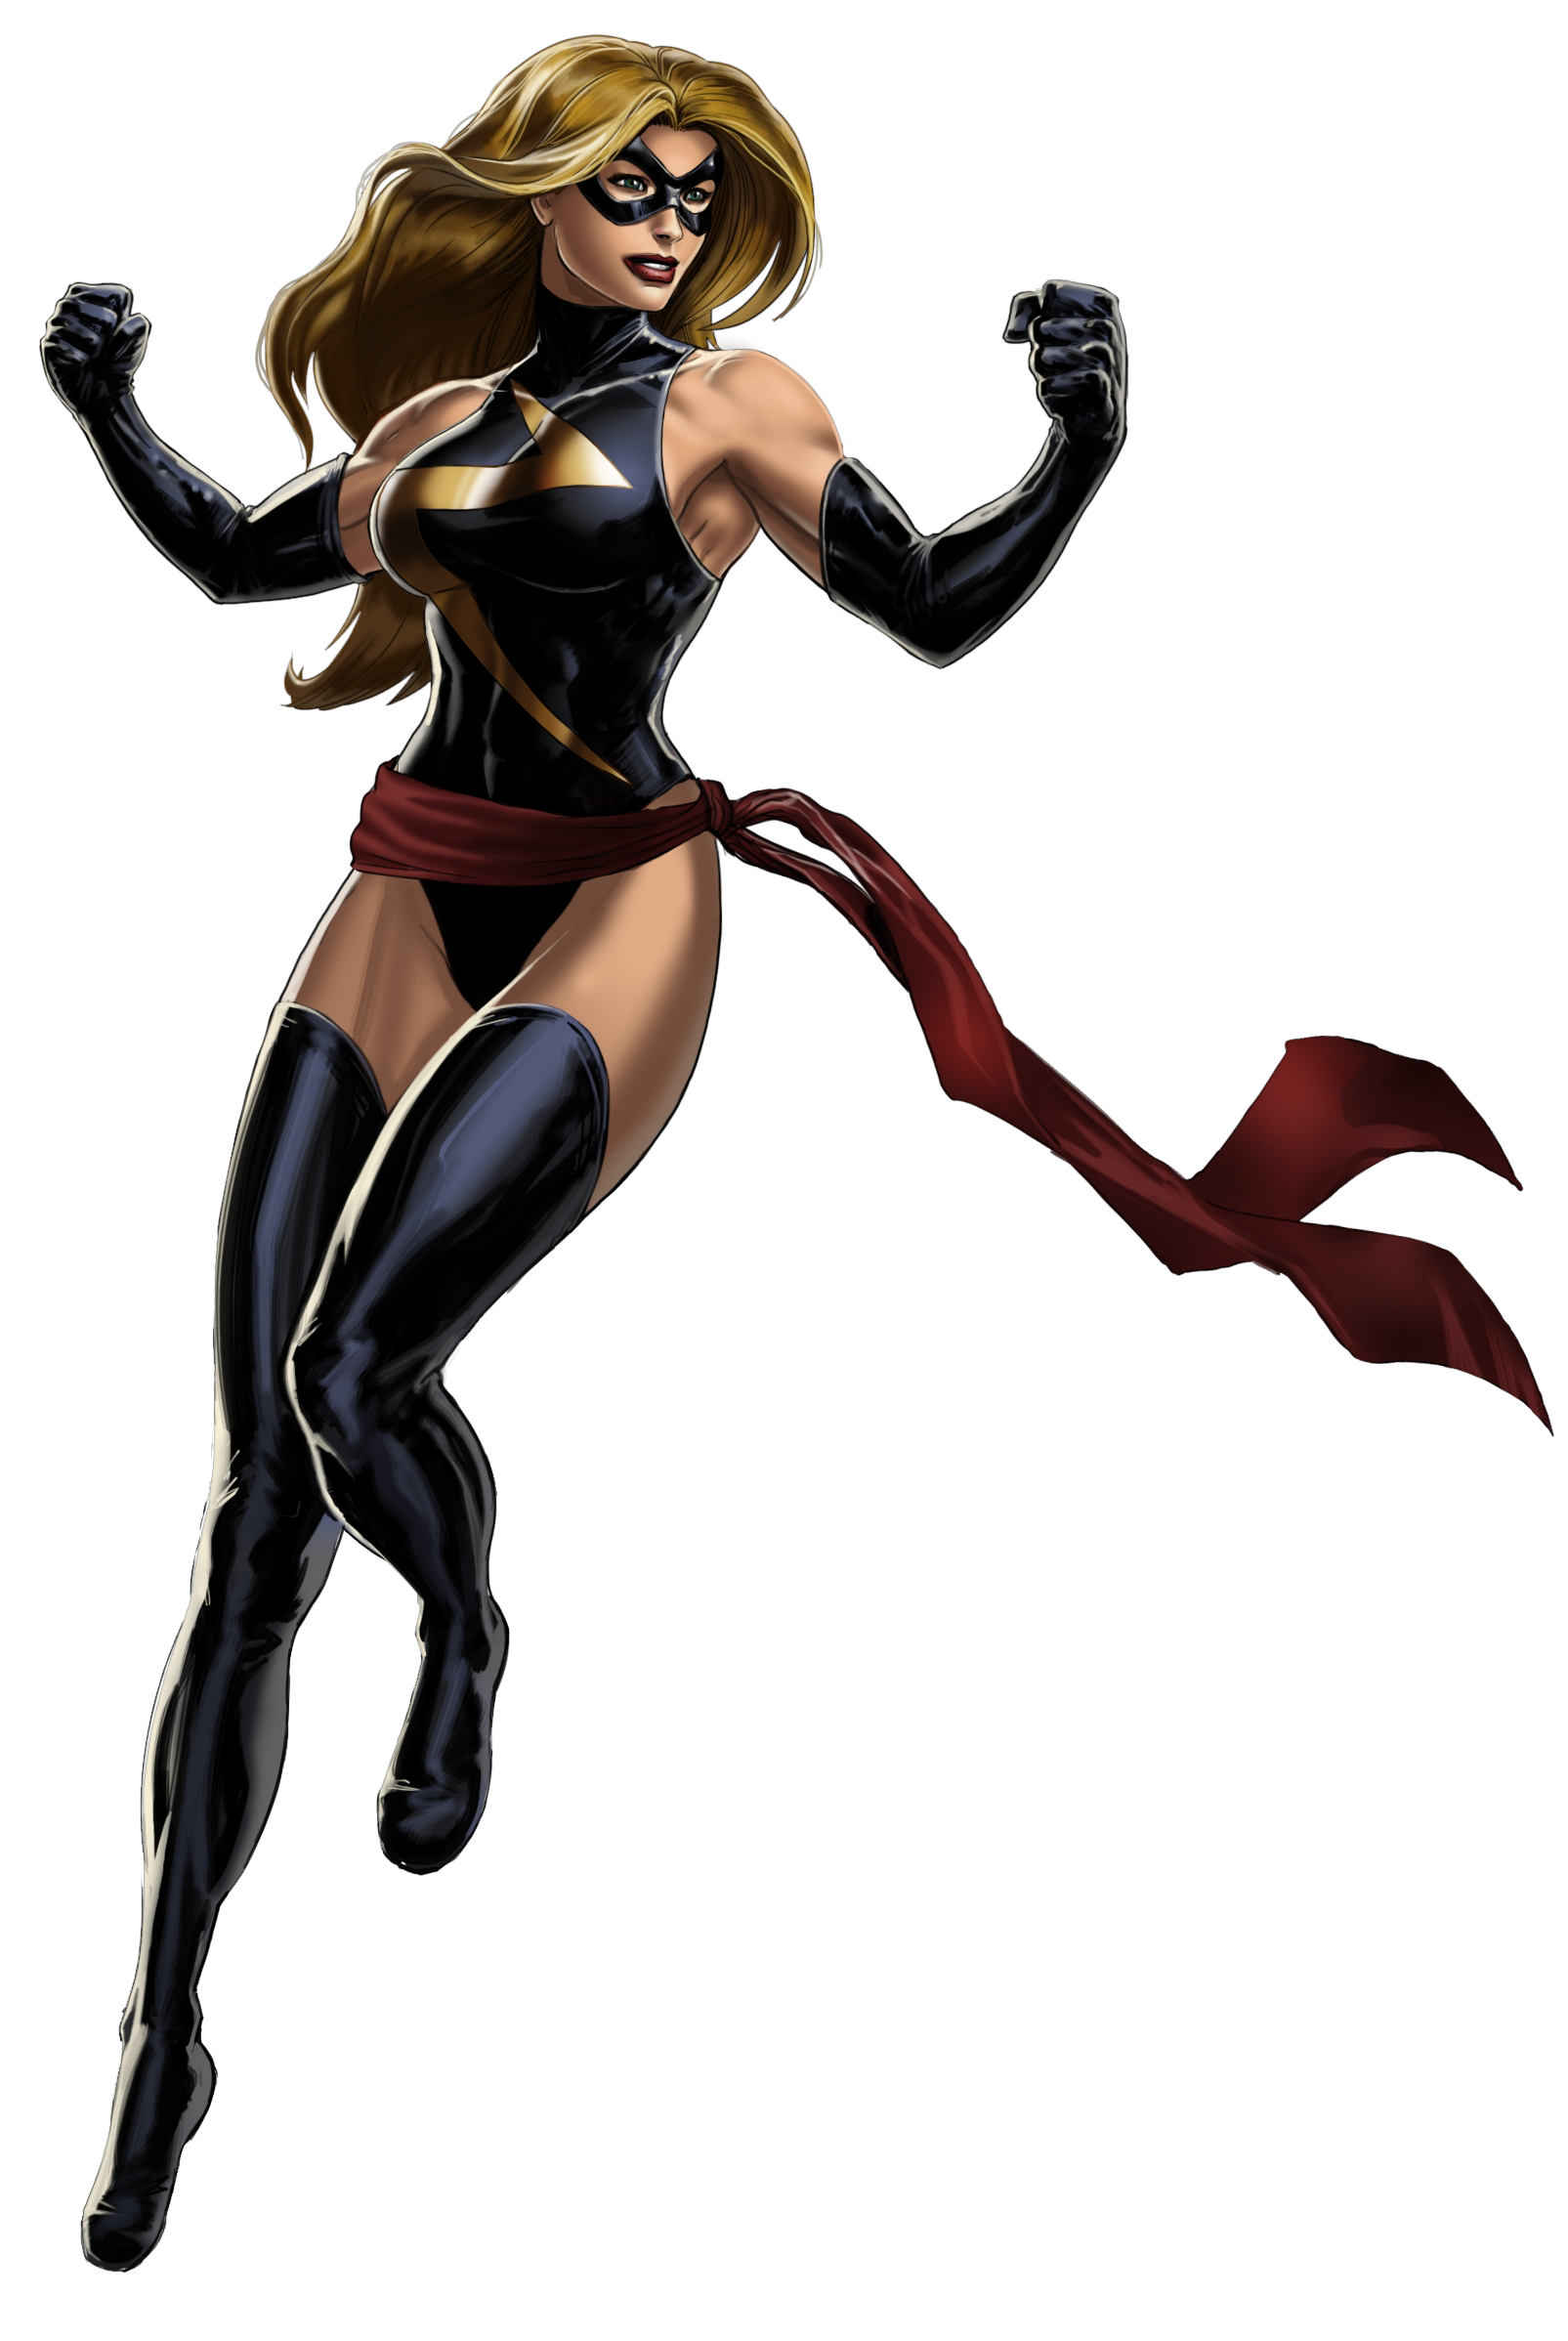 Ms. Marvel #9